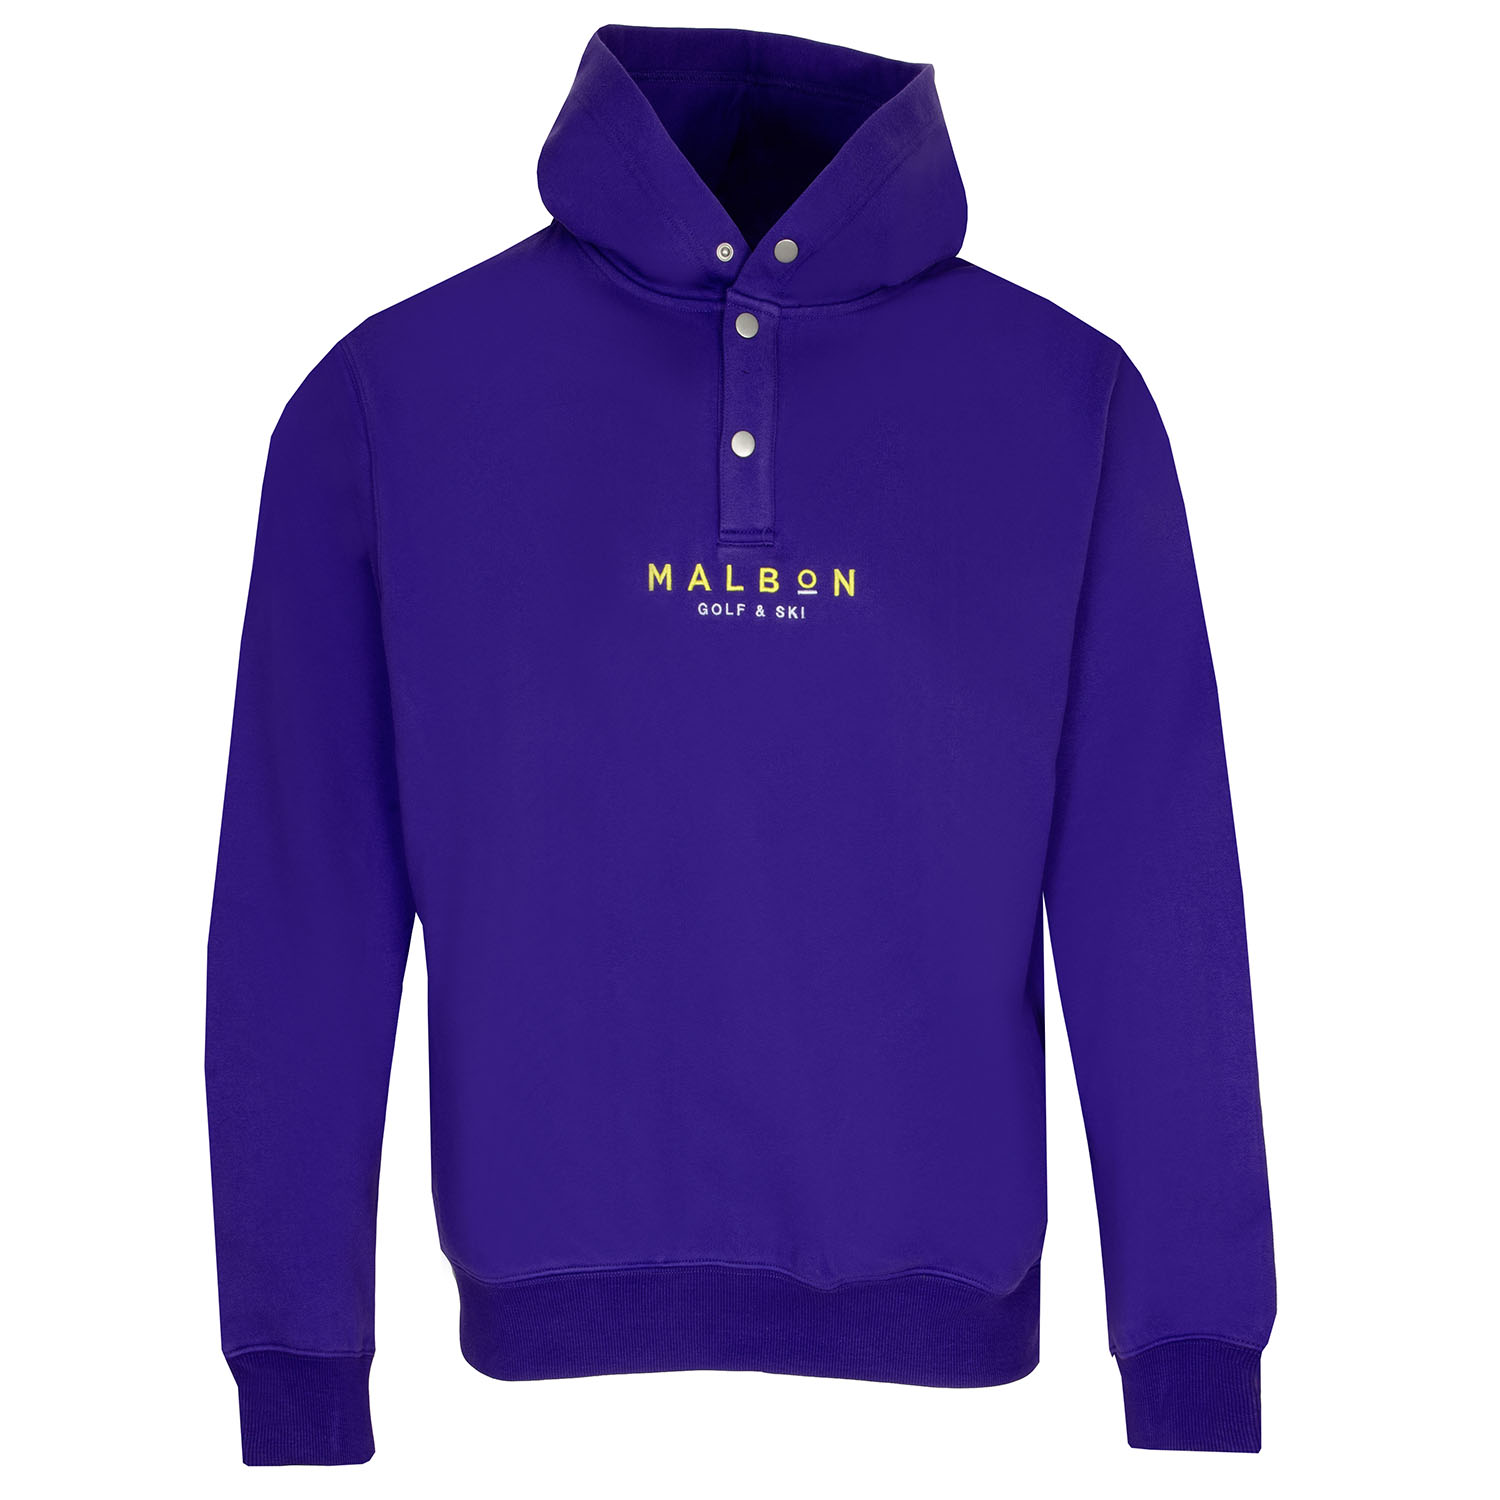 Malbon Golf & Ski Hoodie – Purple